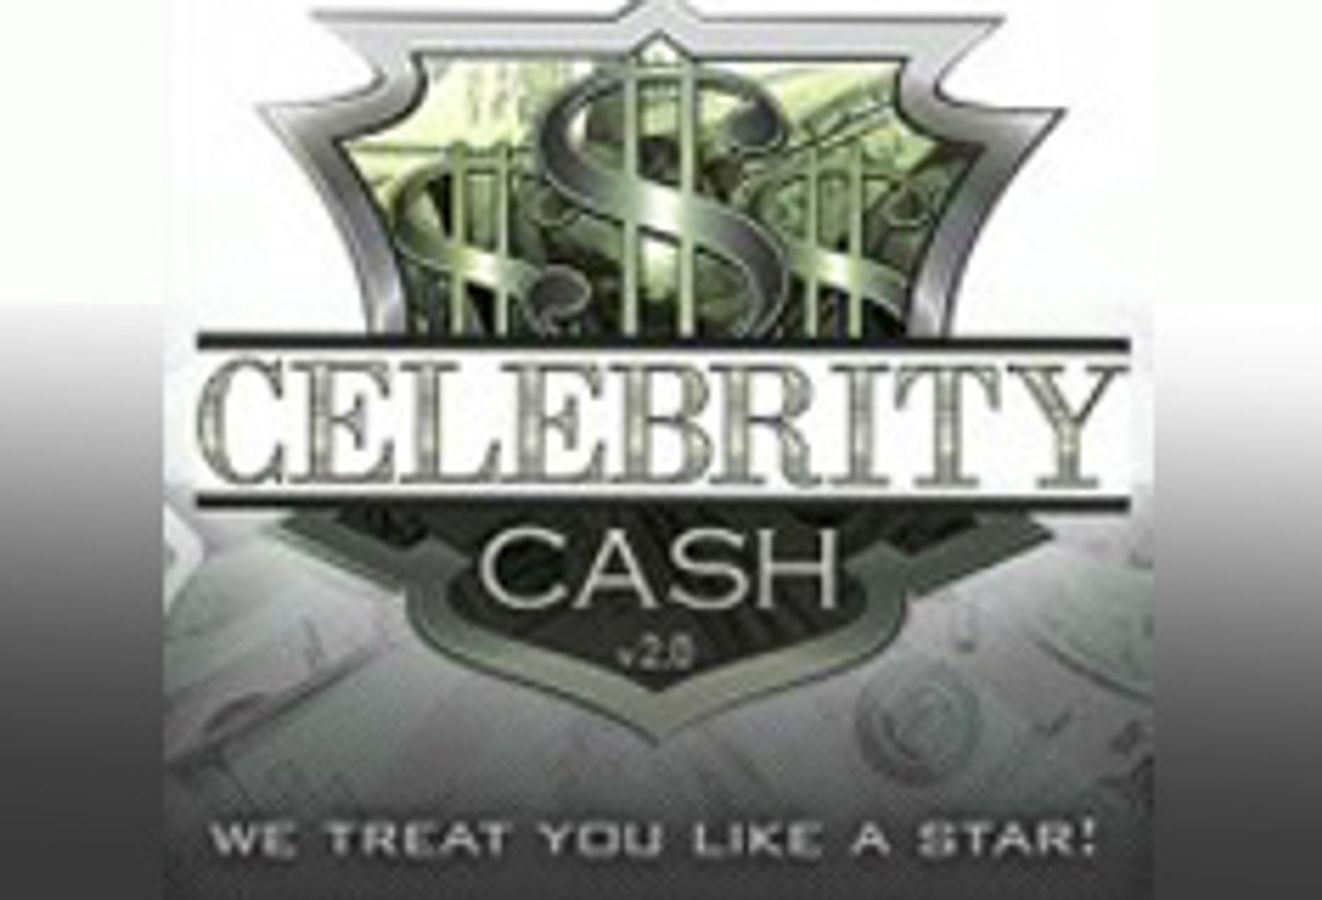 CelebrityCash